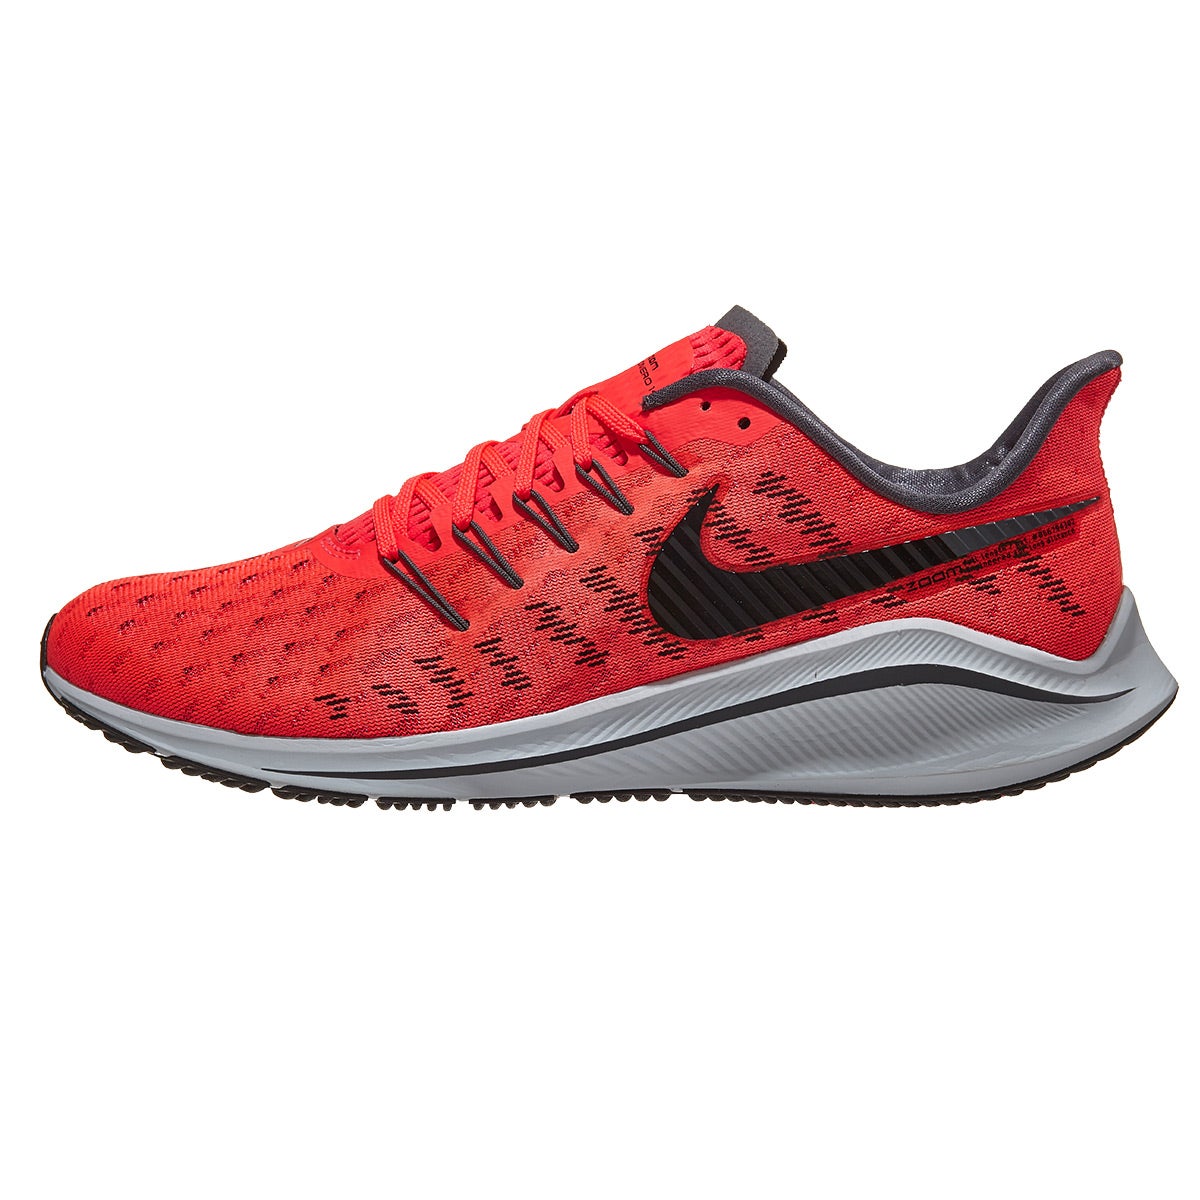 Nike Zoom Vomero 14 Men's Shoes Bright Crimson/Black 360° View ...